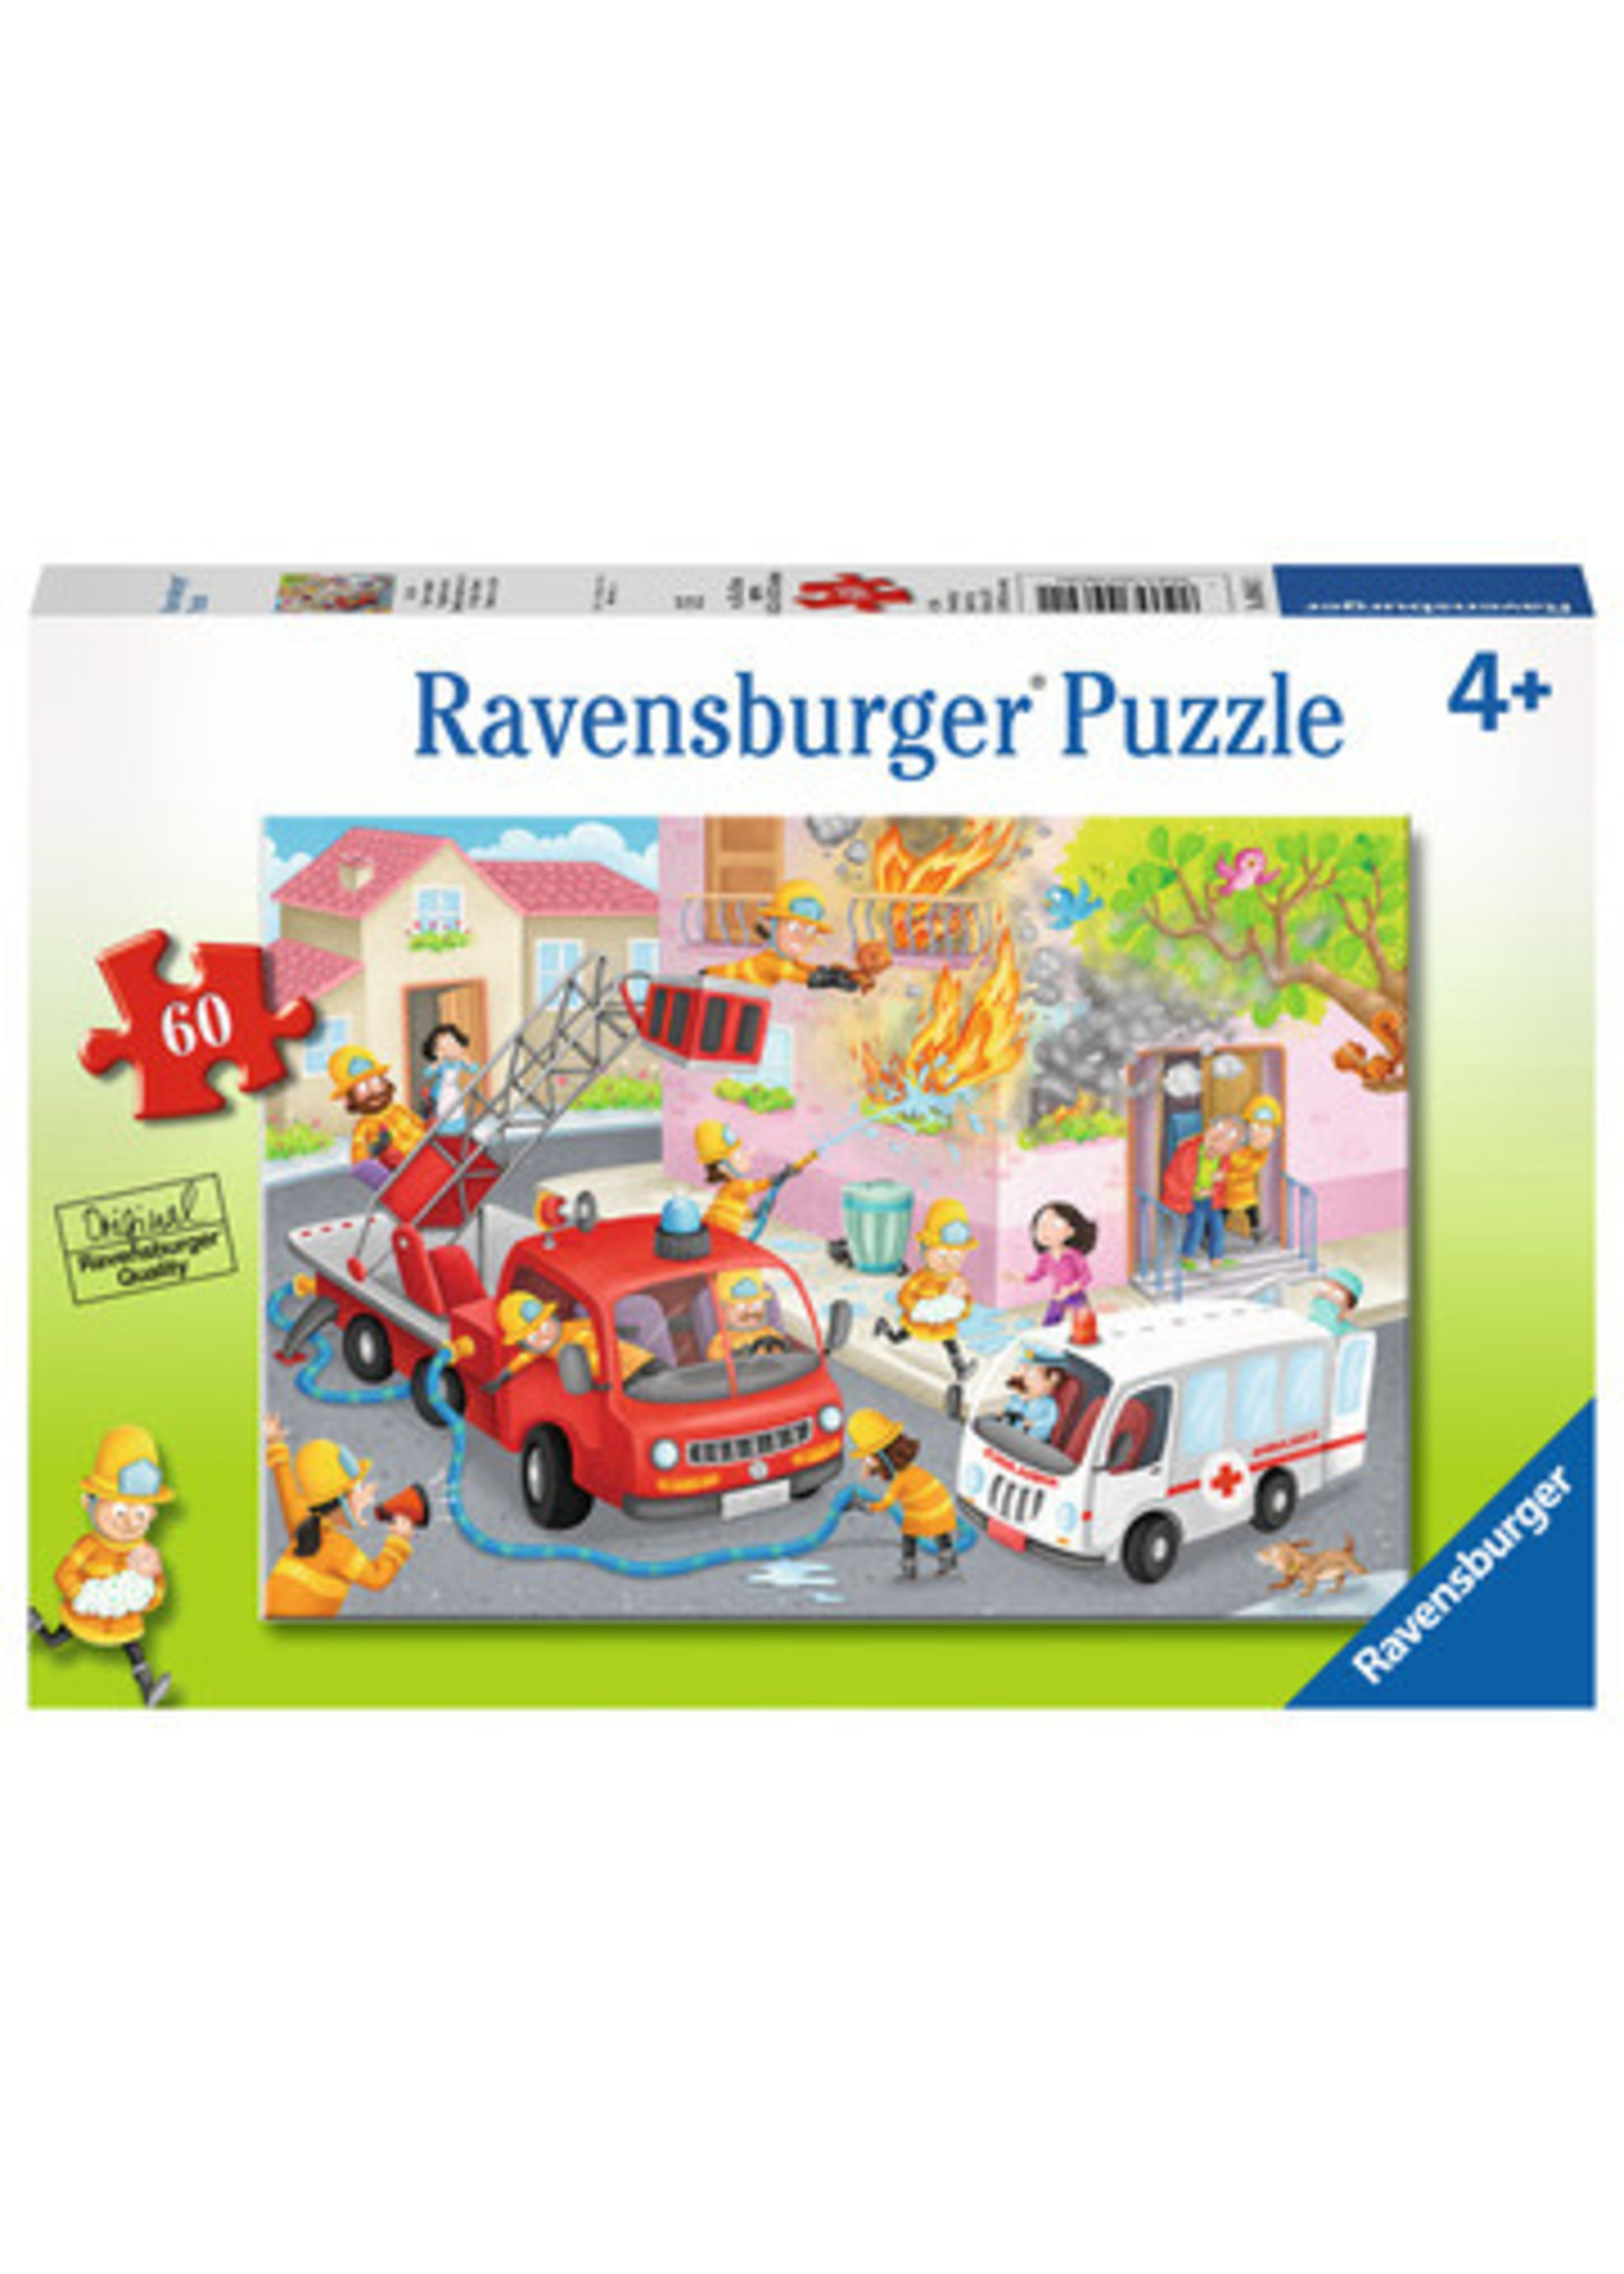 Ravensburger "Firefighter Rescue" 60 Piece Puzzle